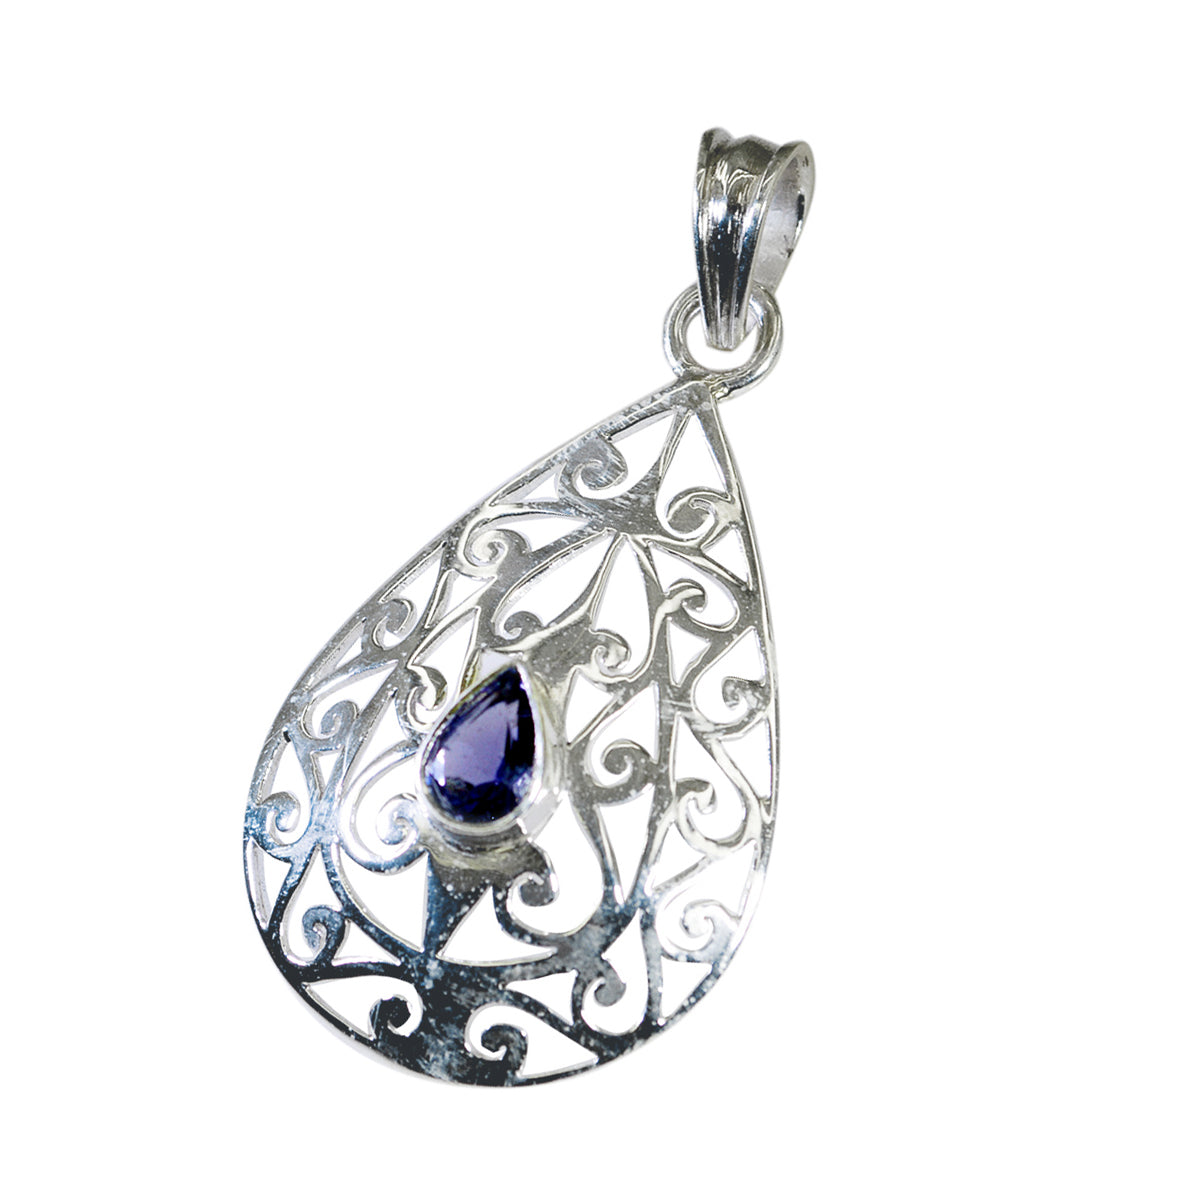 Riyo Prepossessing Gemstone Pear Faceted Blue Iolite Sterling Silver Pendant Gift For Christmas